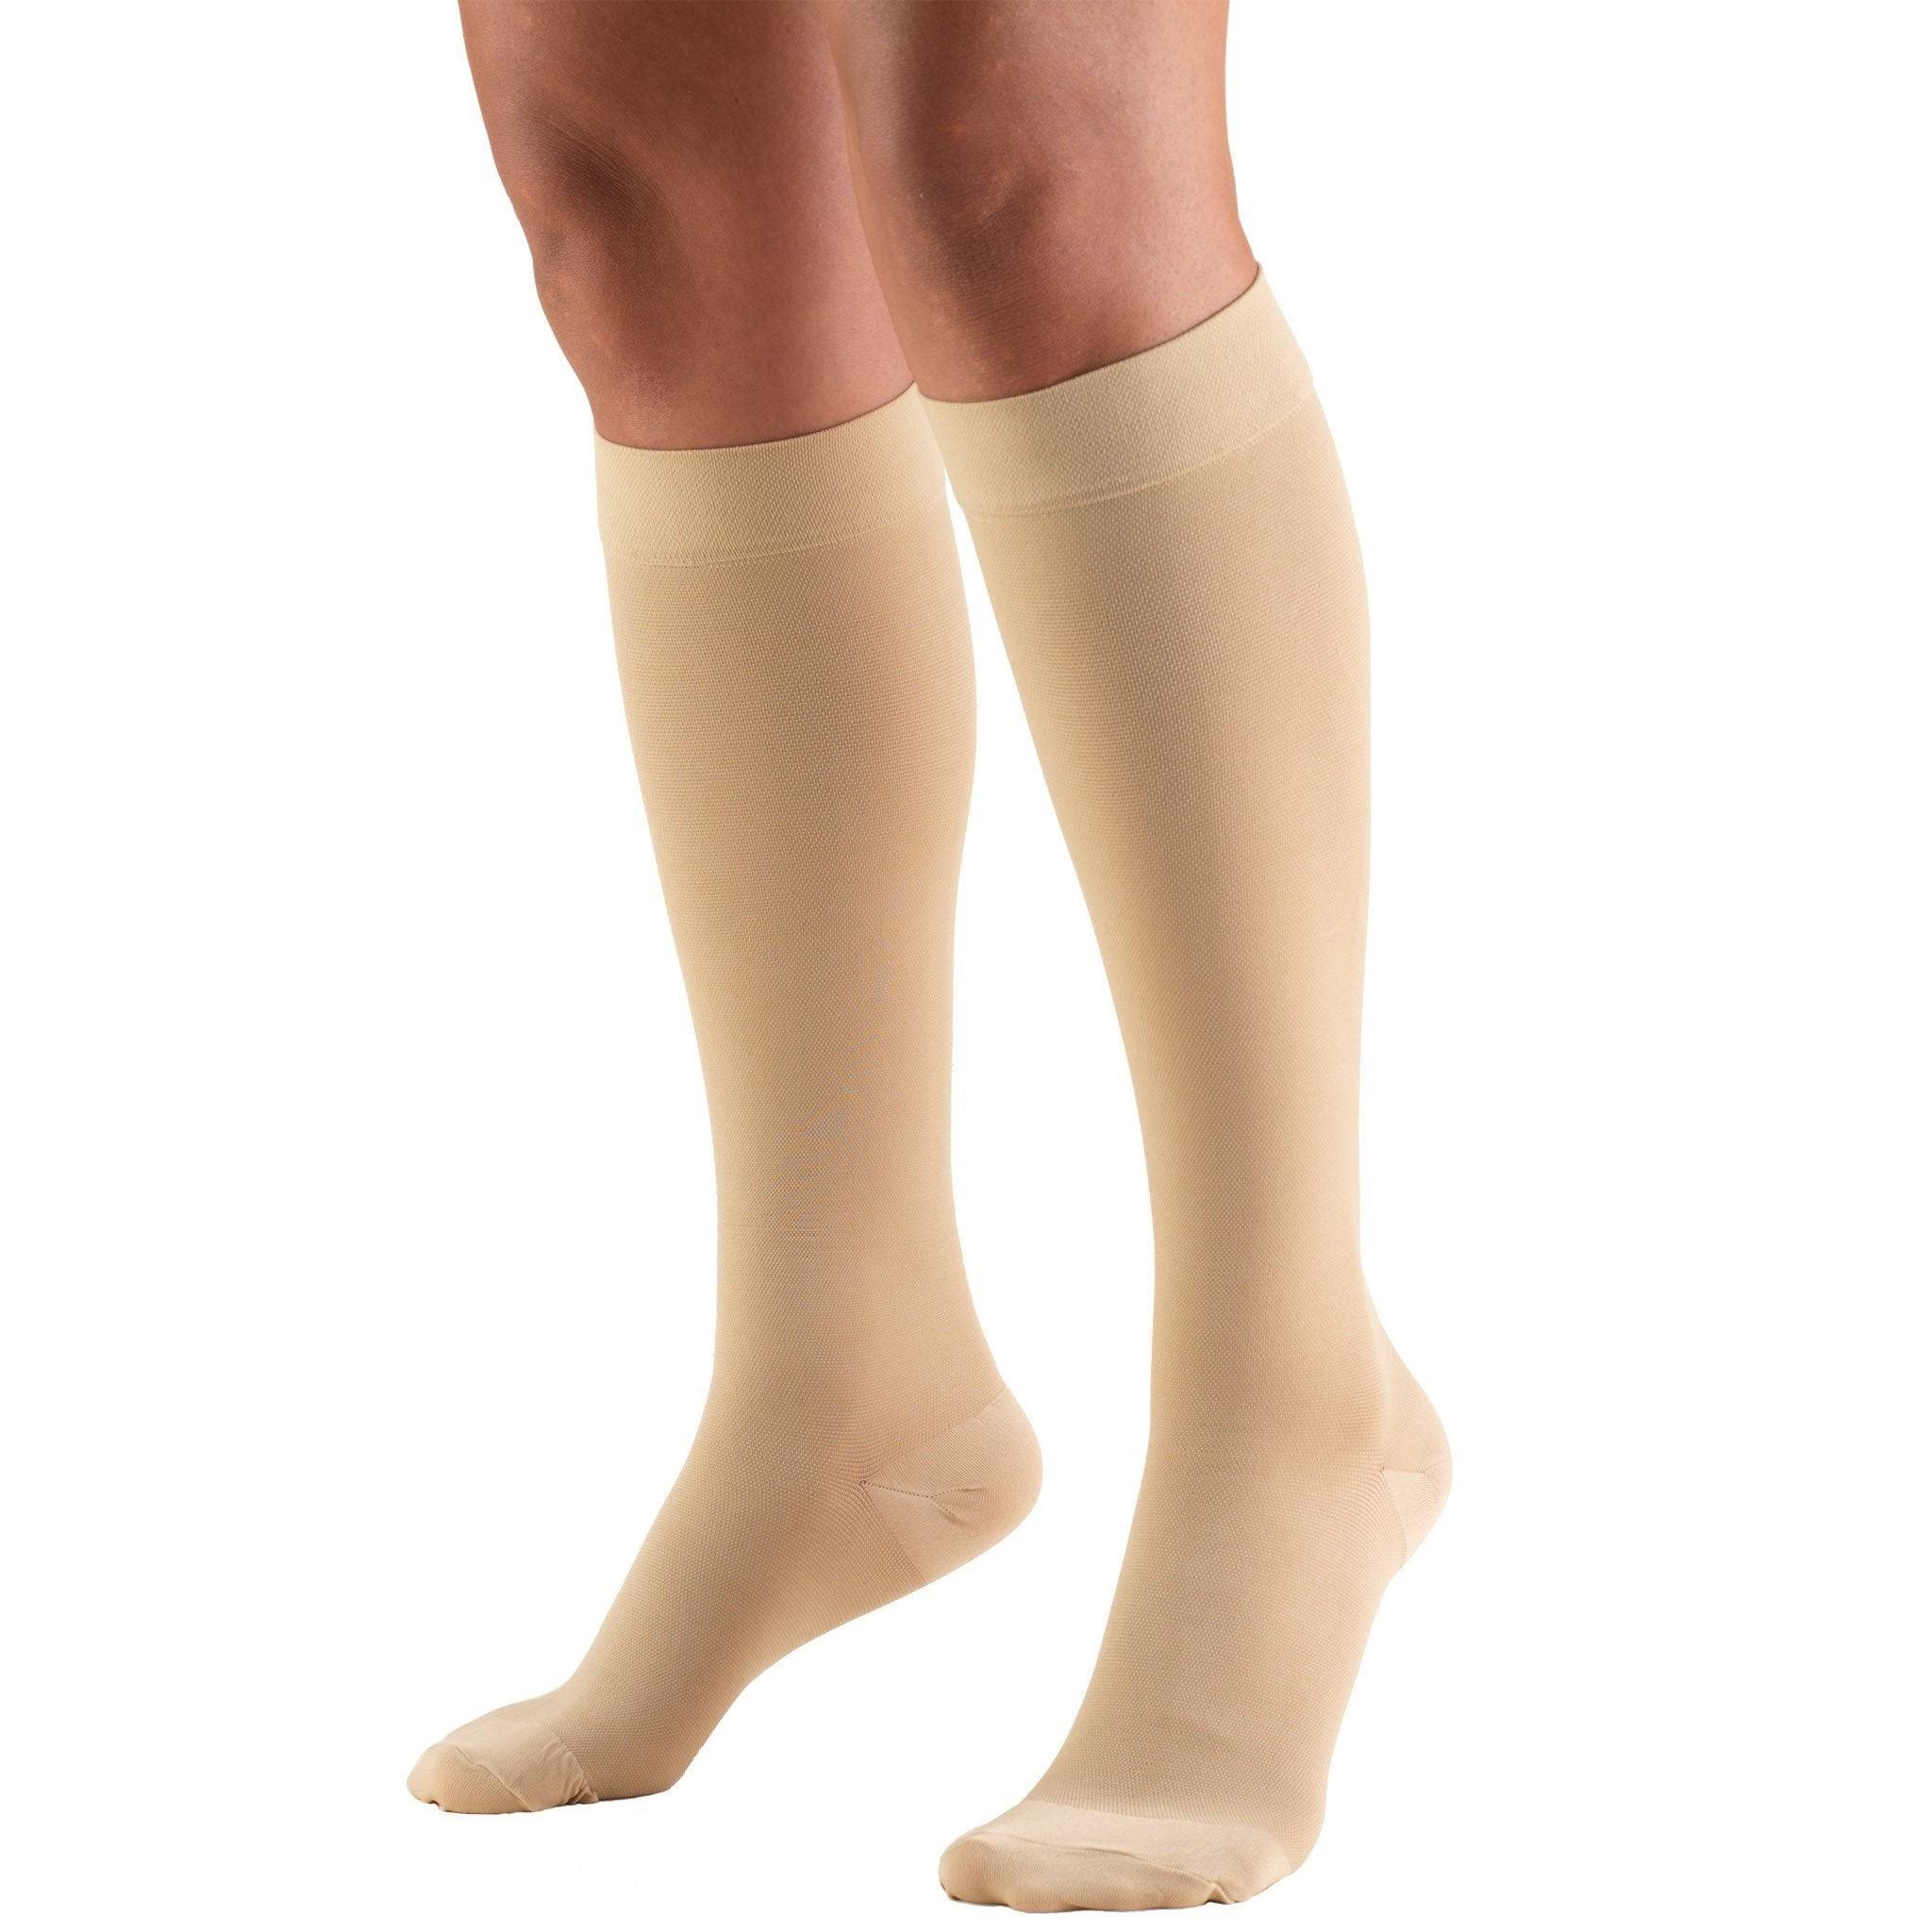 Truform Below Knee Closed Toe Compression Stockings - Beige, 3X Large